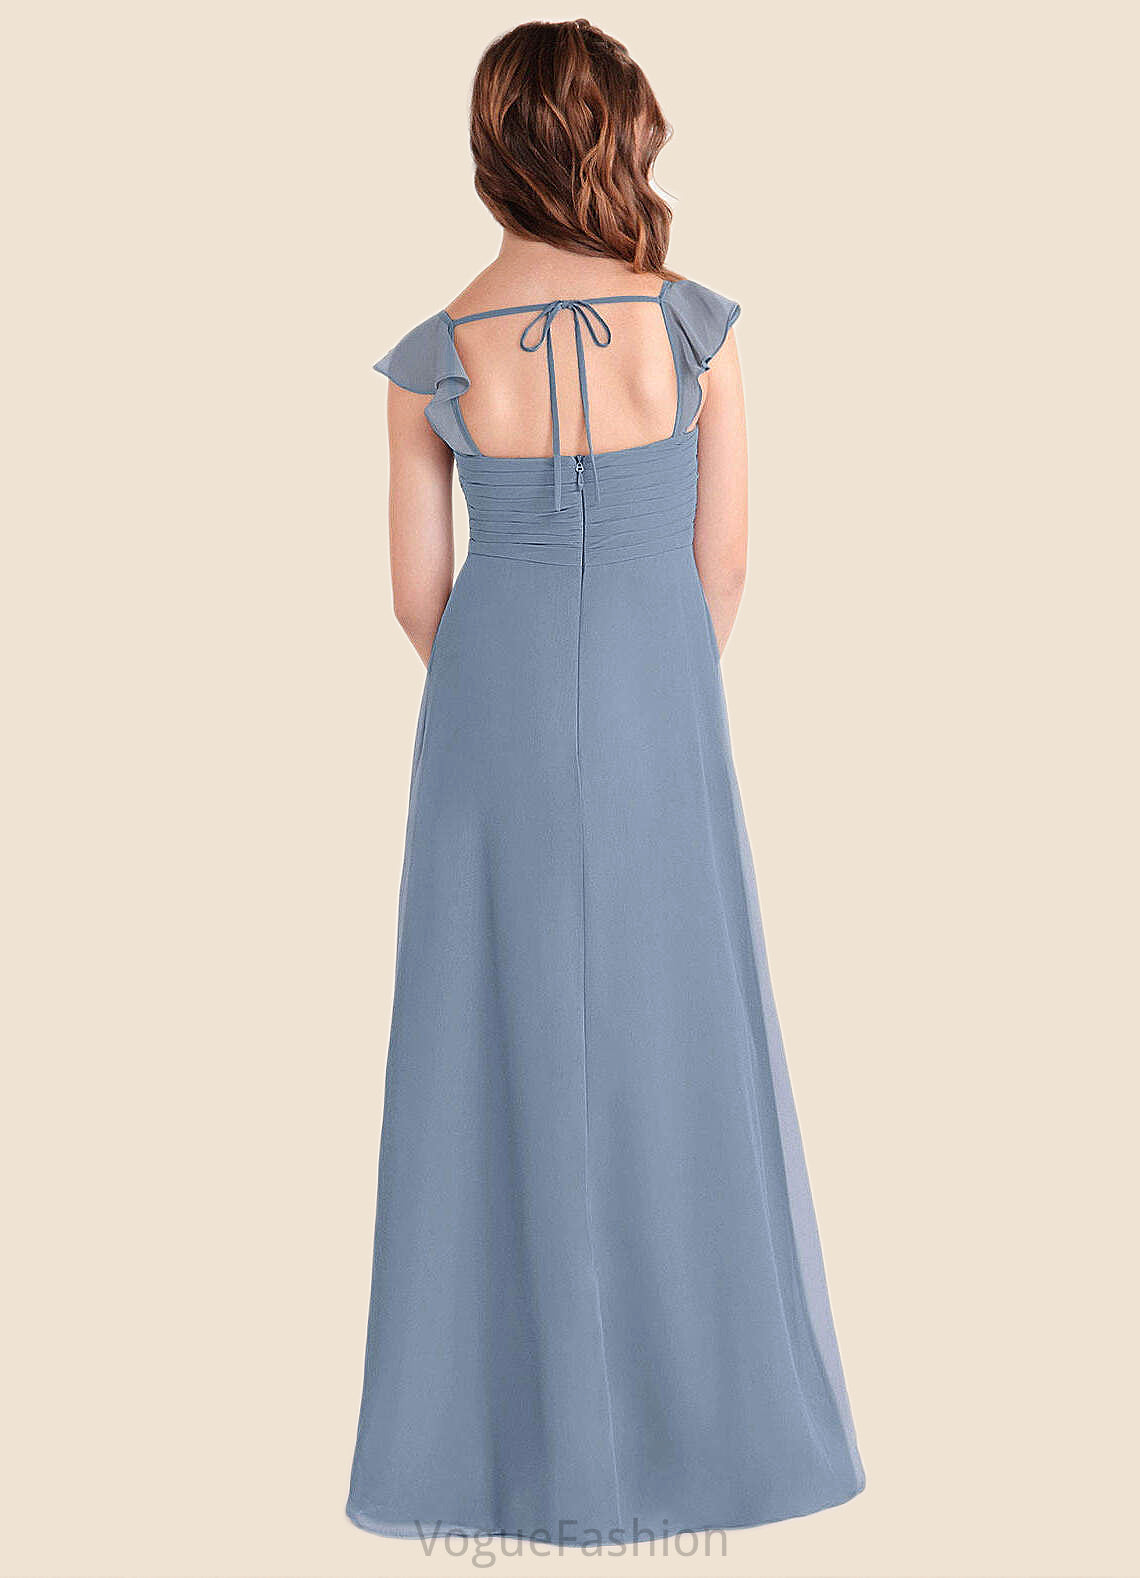 Claire A-Line Sweetheart Neckline Chiffon Floor-Length Junior Bridesmaid Dress dusty blue DKP0022869